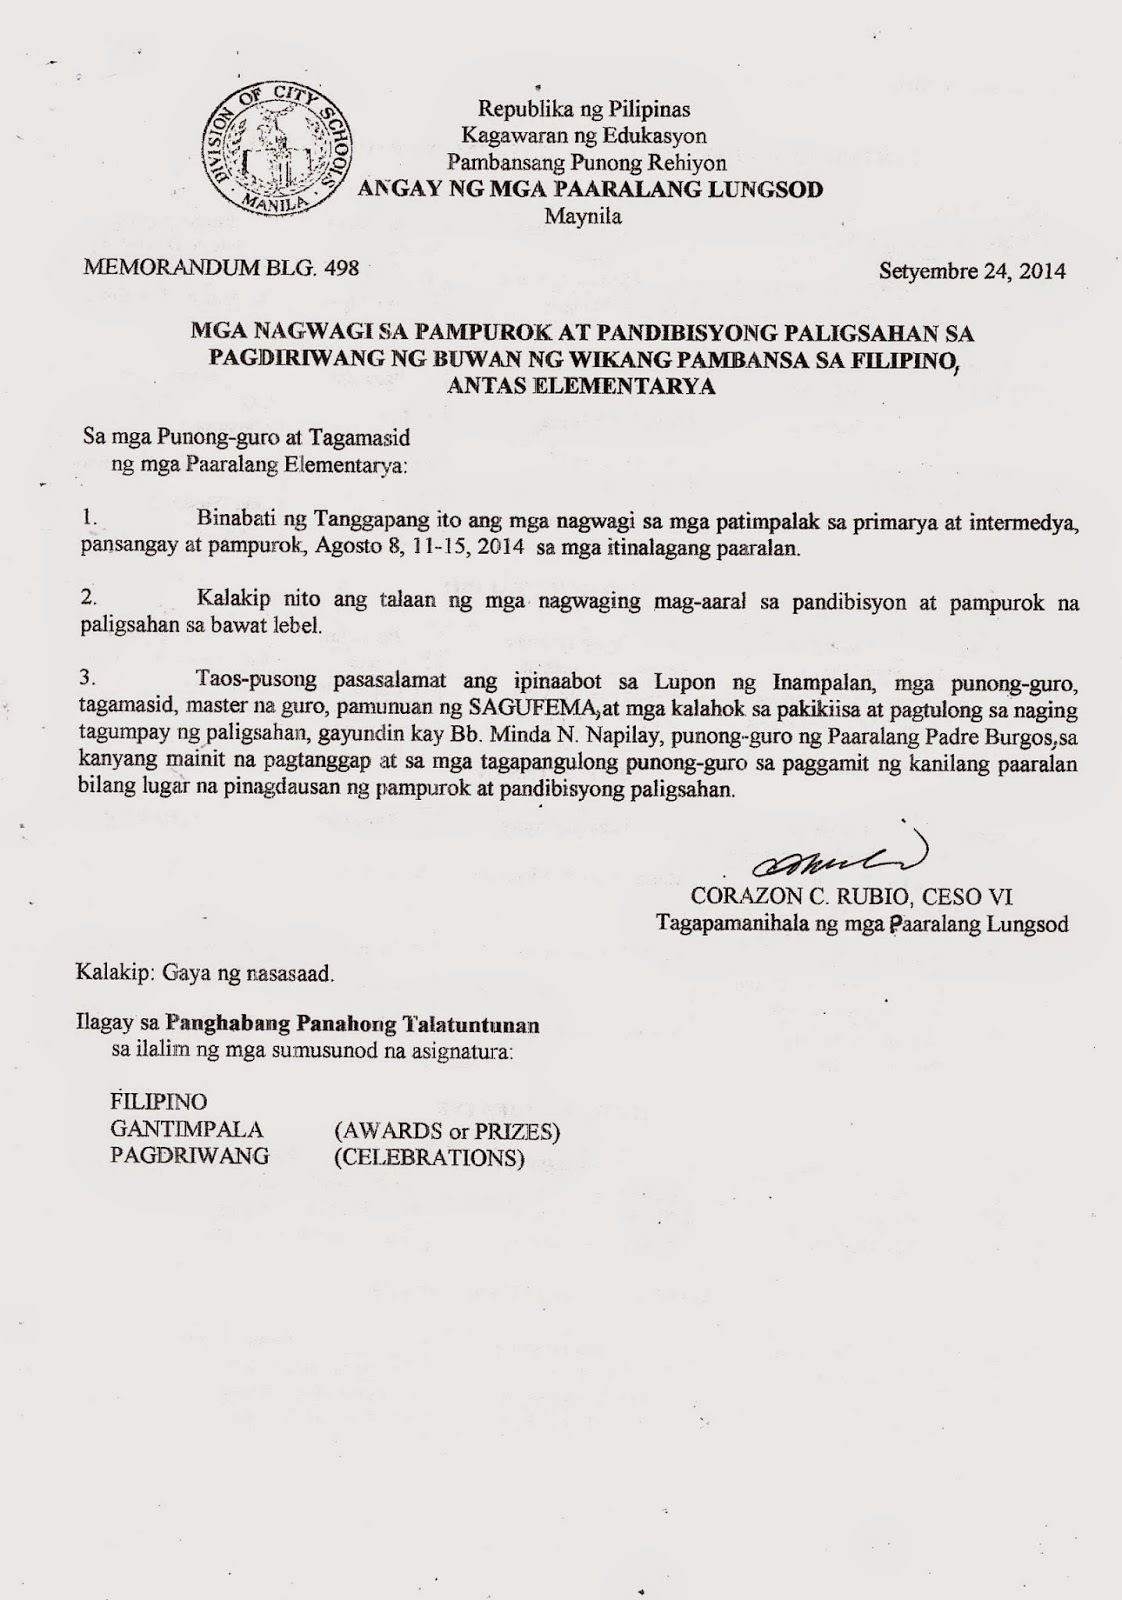 Department of Education Manila: Division Memorandum No. 498 - MGA